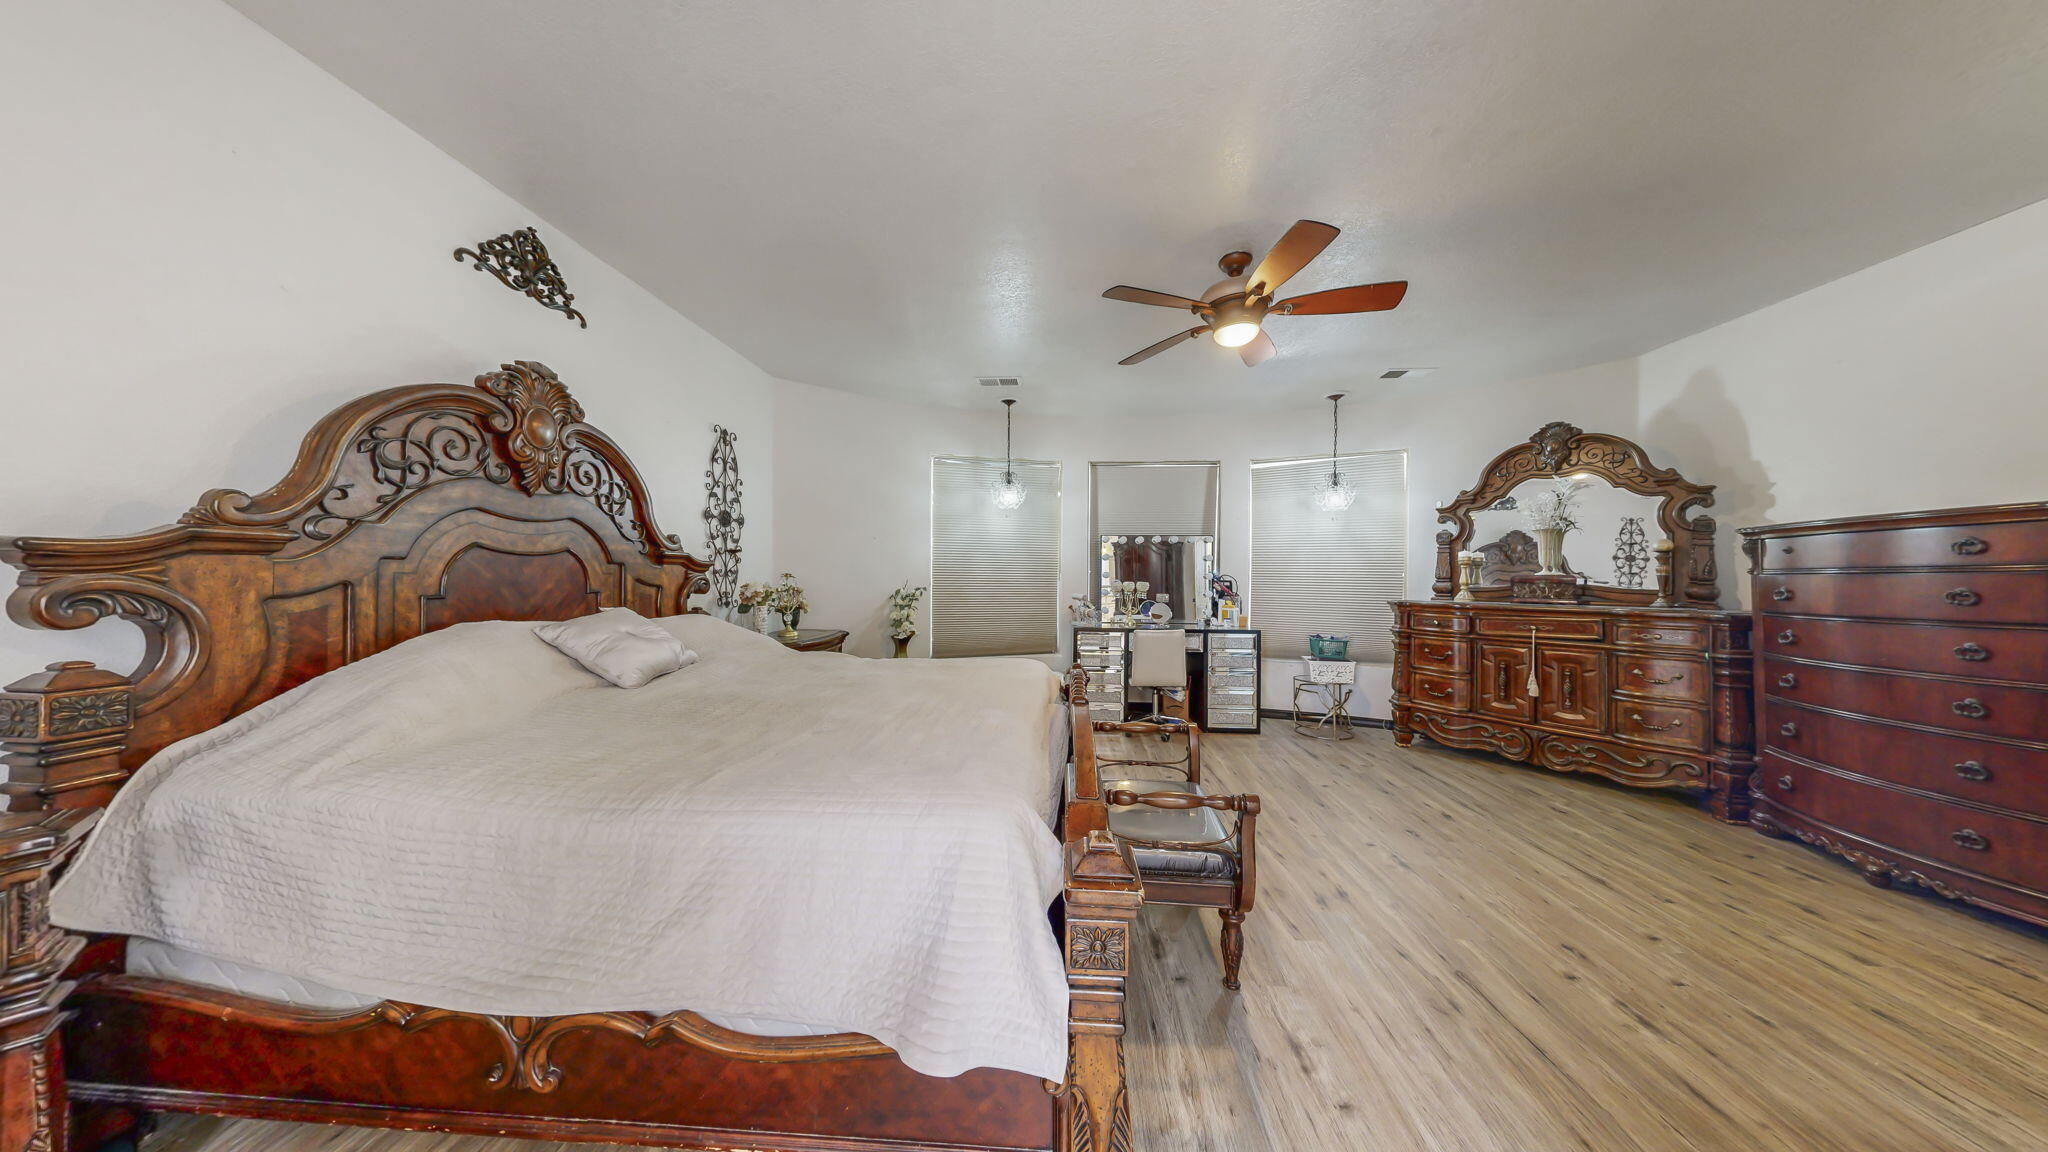 401 8th Street NE, Rio Rancho, New Mexico 87124, 3 Bedrooms Bedrooms, ,4 BathroomsBathrooms,Residential,For Sale,401 8th Street NE,1059594